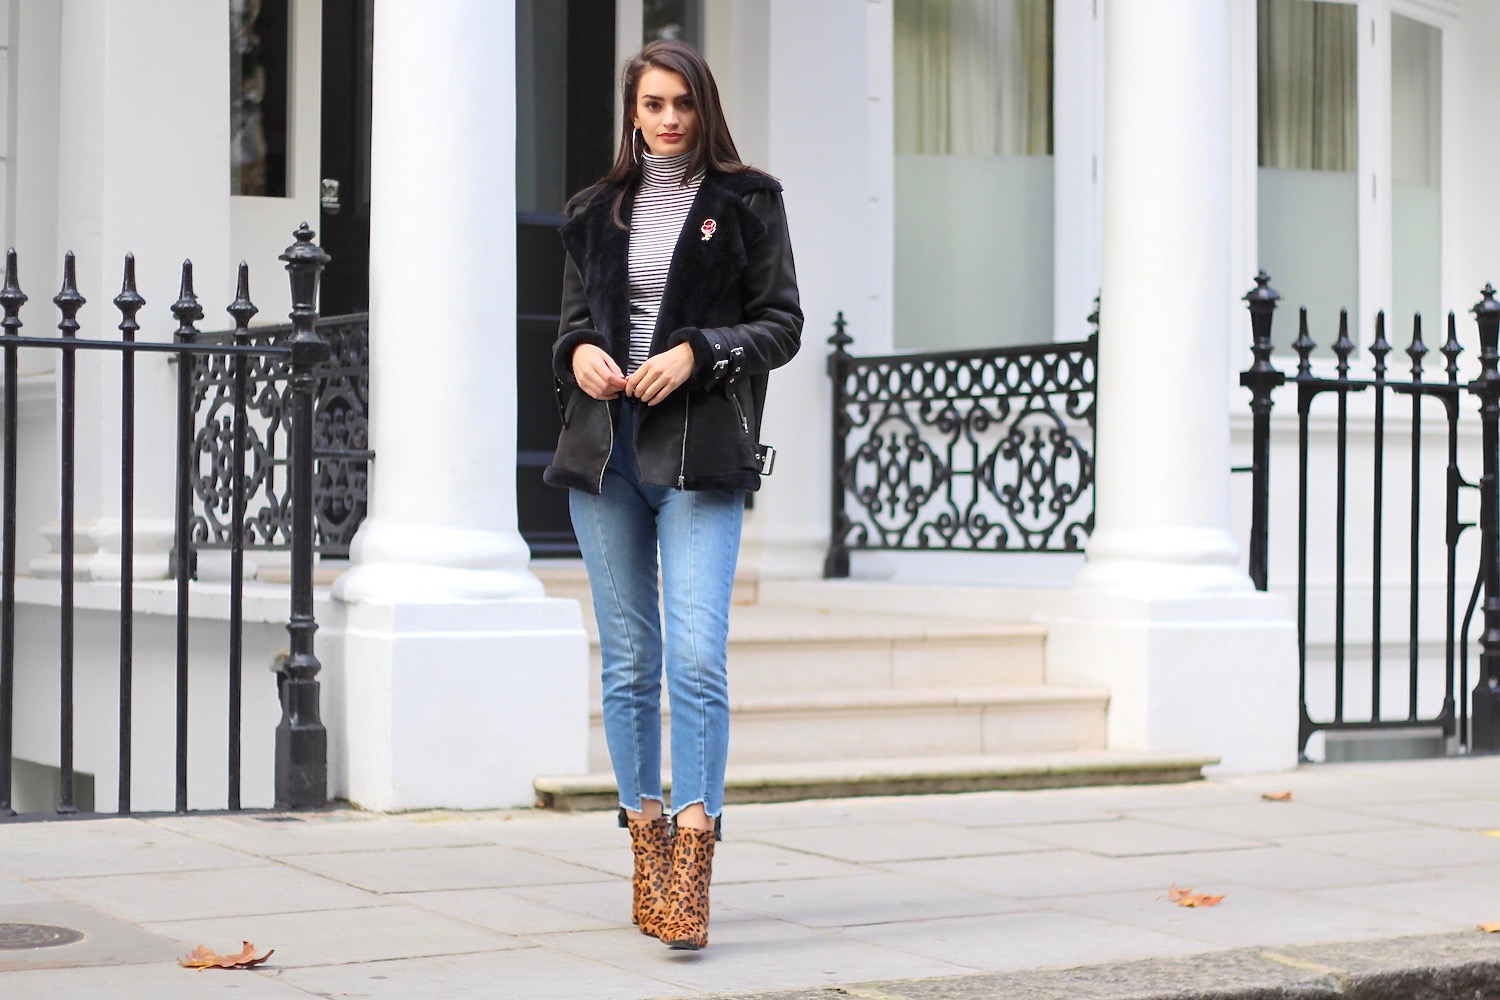 peexo street style blogger london